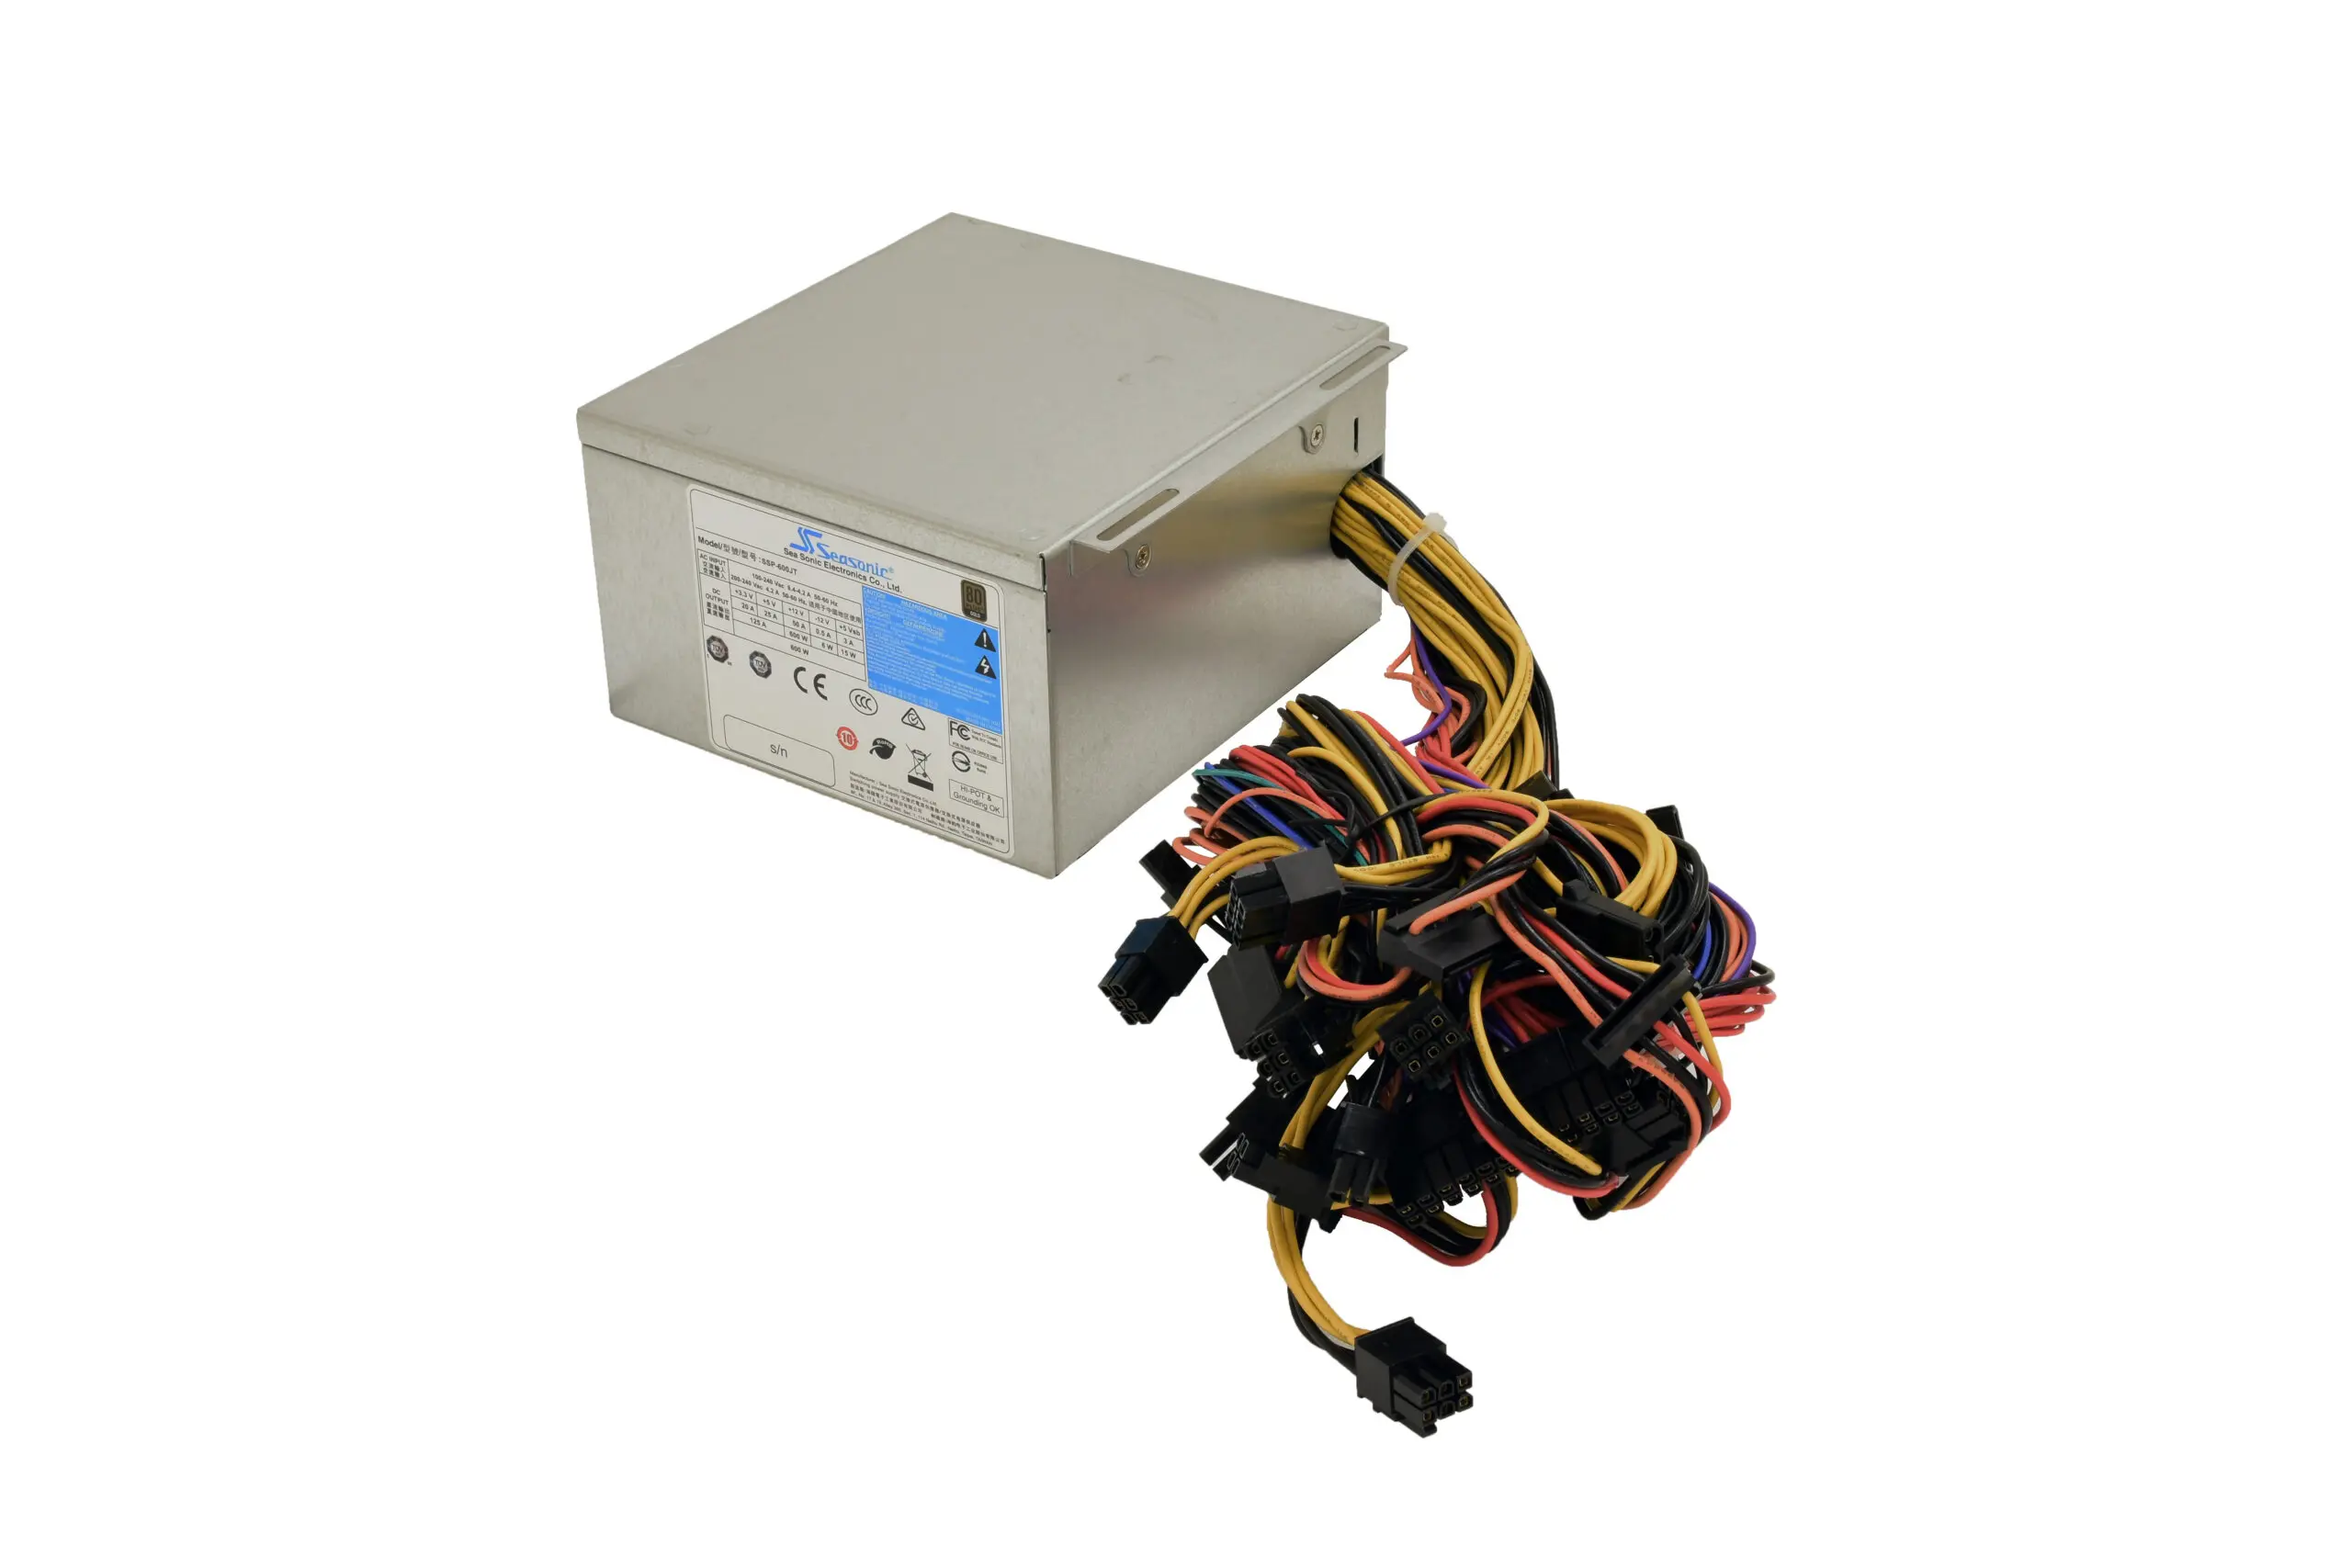 Power supply 600W, APFC, 12cm fan, ATX 12V v.2.3, 80+ gold, DC to DC converter design, MTBF full load 25? amb. : >100K hours; SSP-600JT - image 2